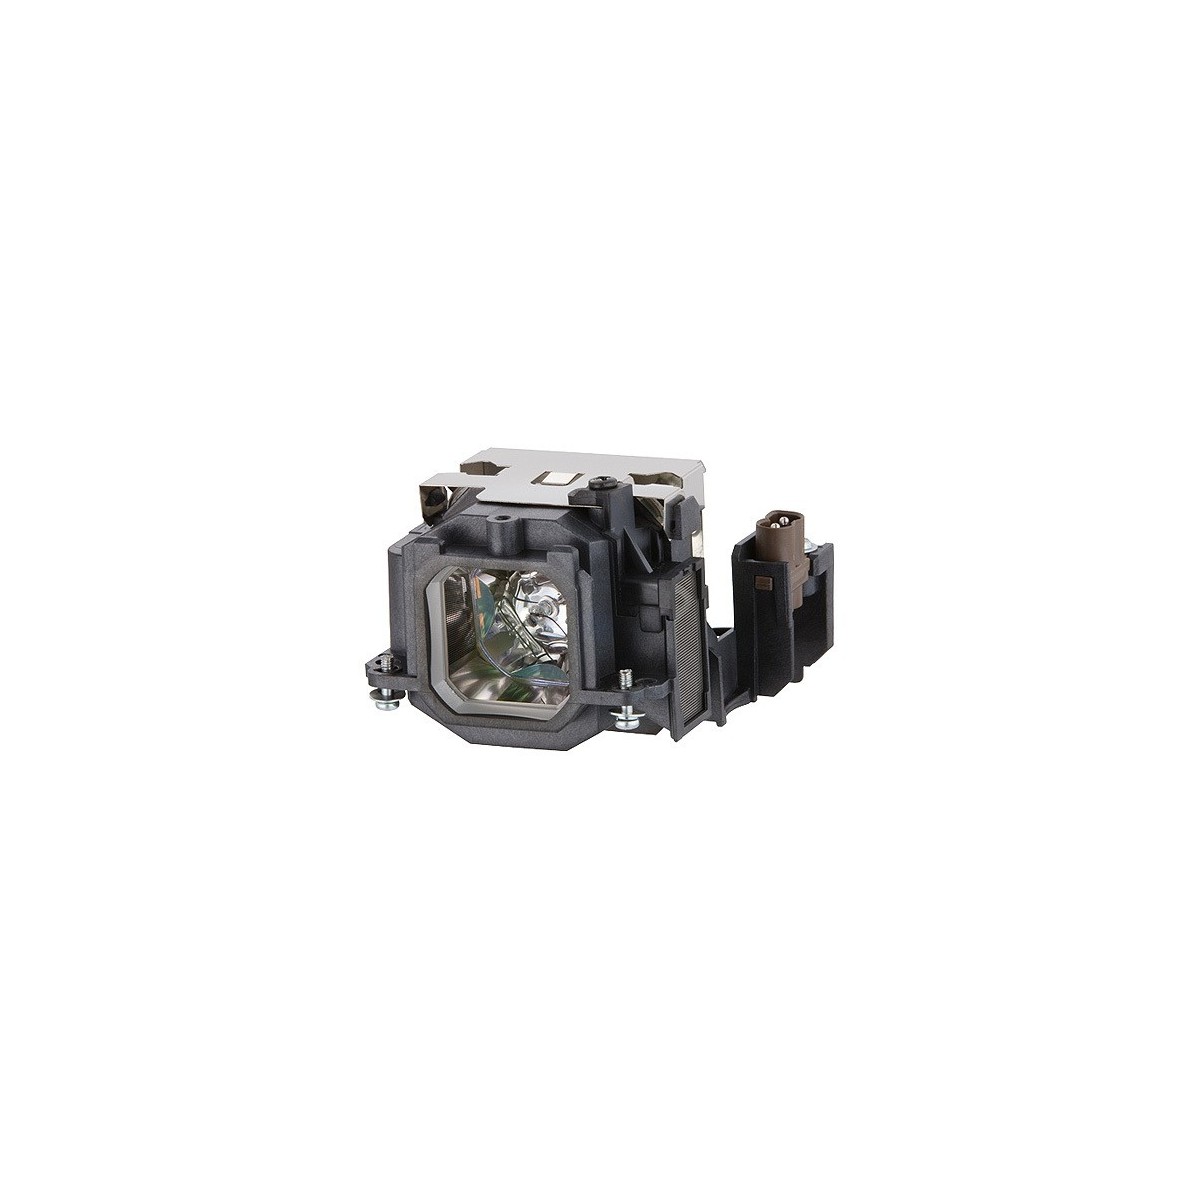 Panasonic ET-LAD60A - Projektor-Austauschlampeneinheit - für PT-DW530 DW530E DW530U DX500 - Ersatzlampe - UHM